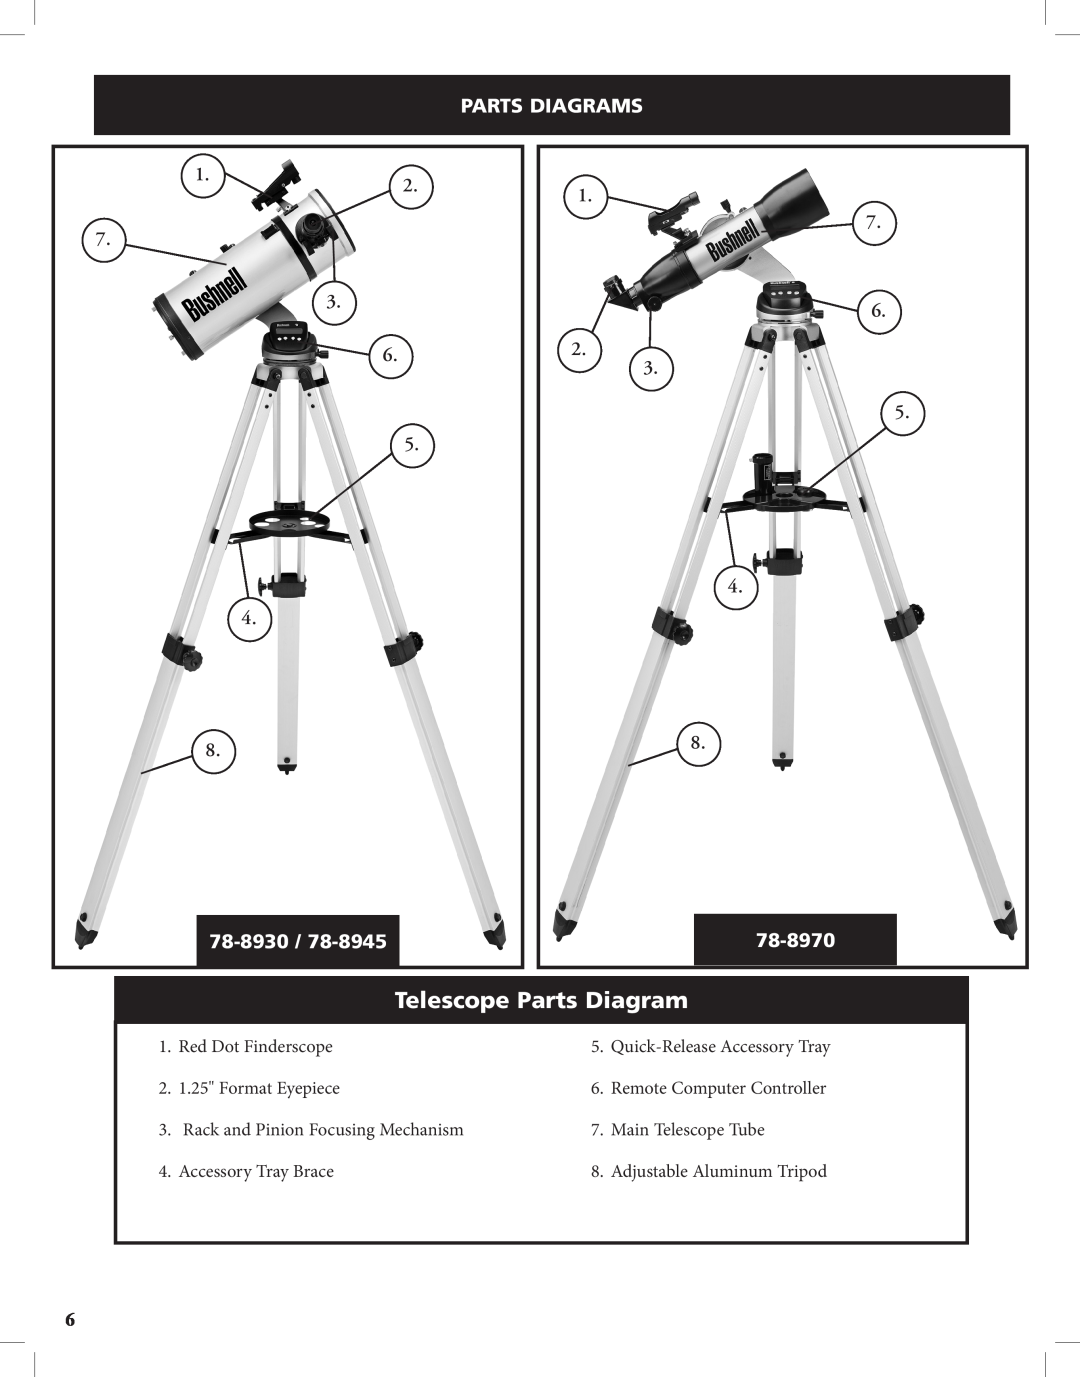 Bushnell Discoverer instruction manual Telescope Parts Diagram, Parts Diagrams, 1.2 7 3 6 5, 1 7 6 2 3 5, 78-8930, 78-8970 